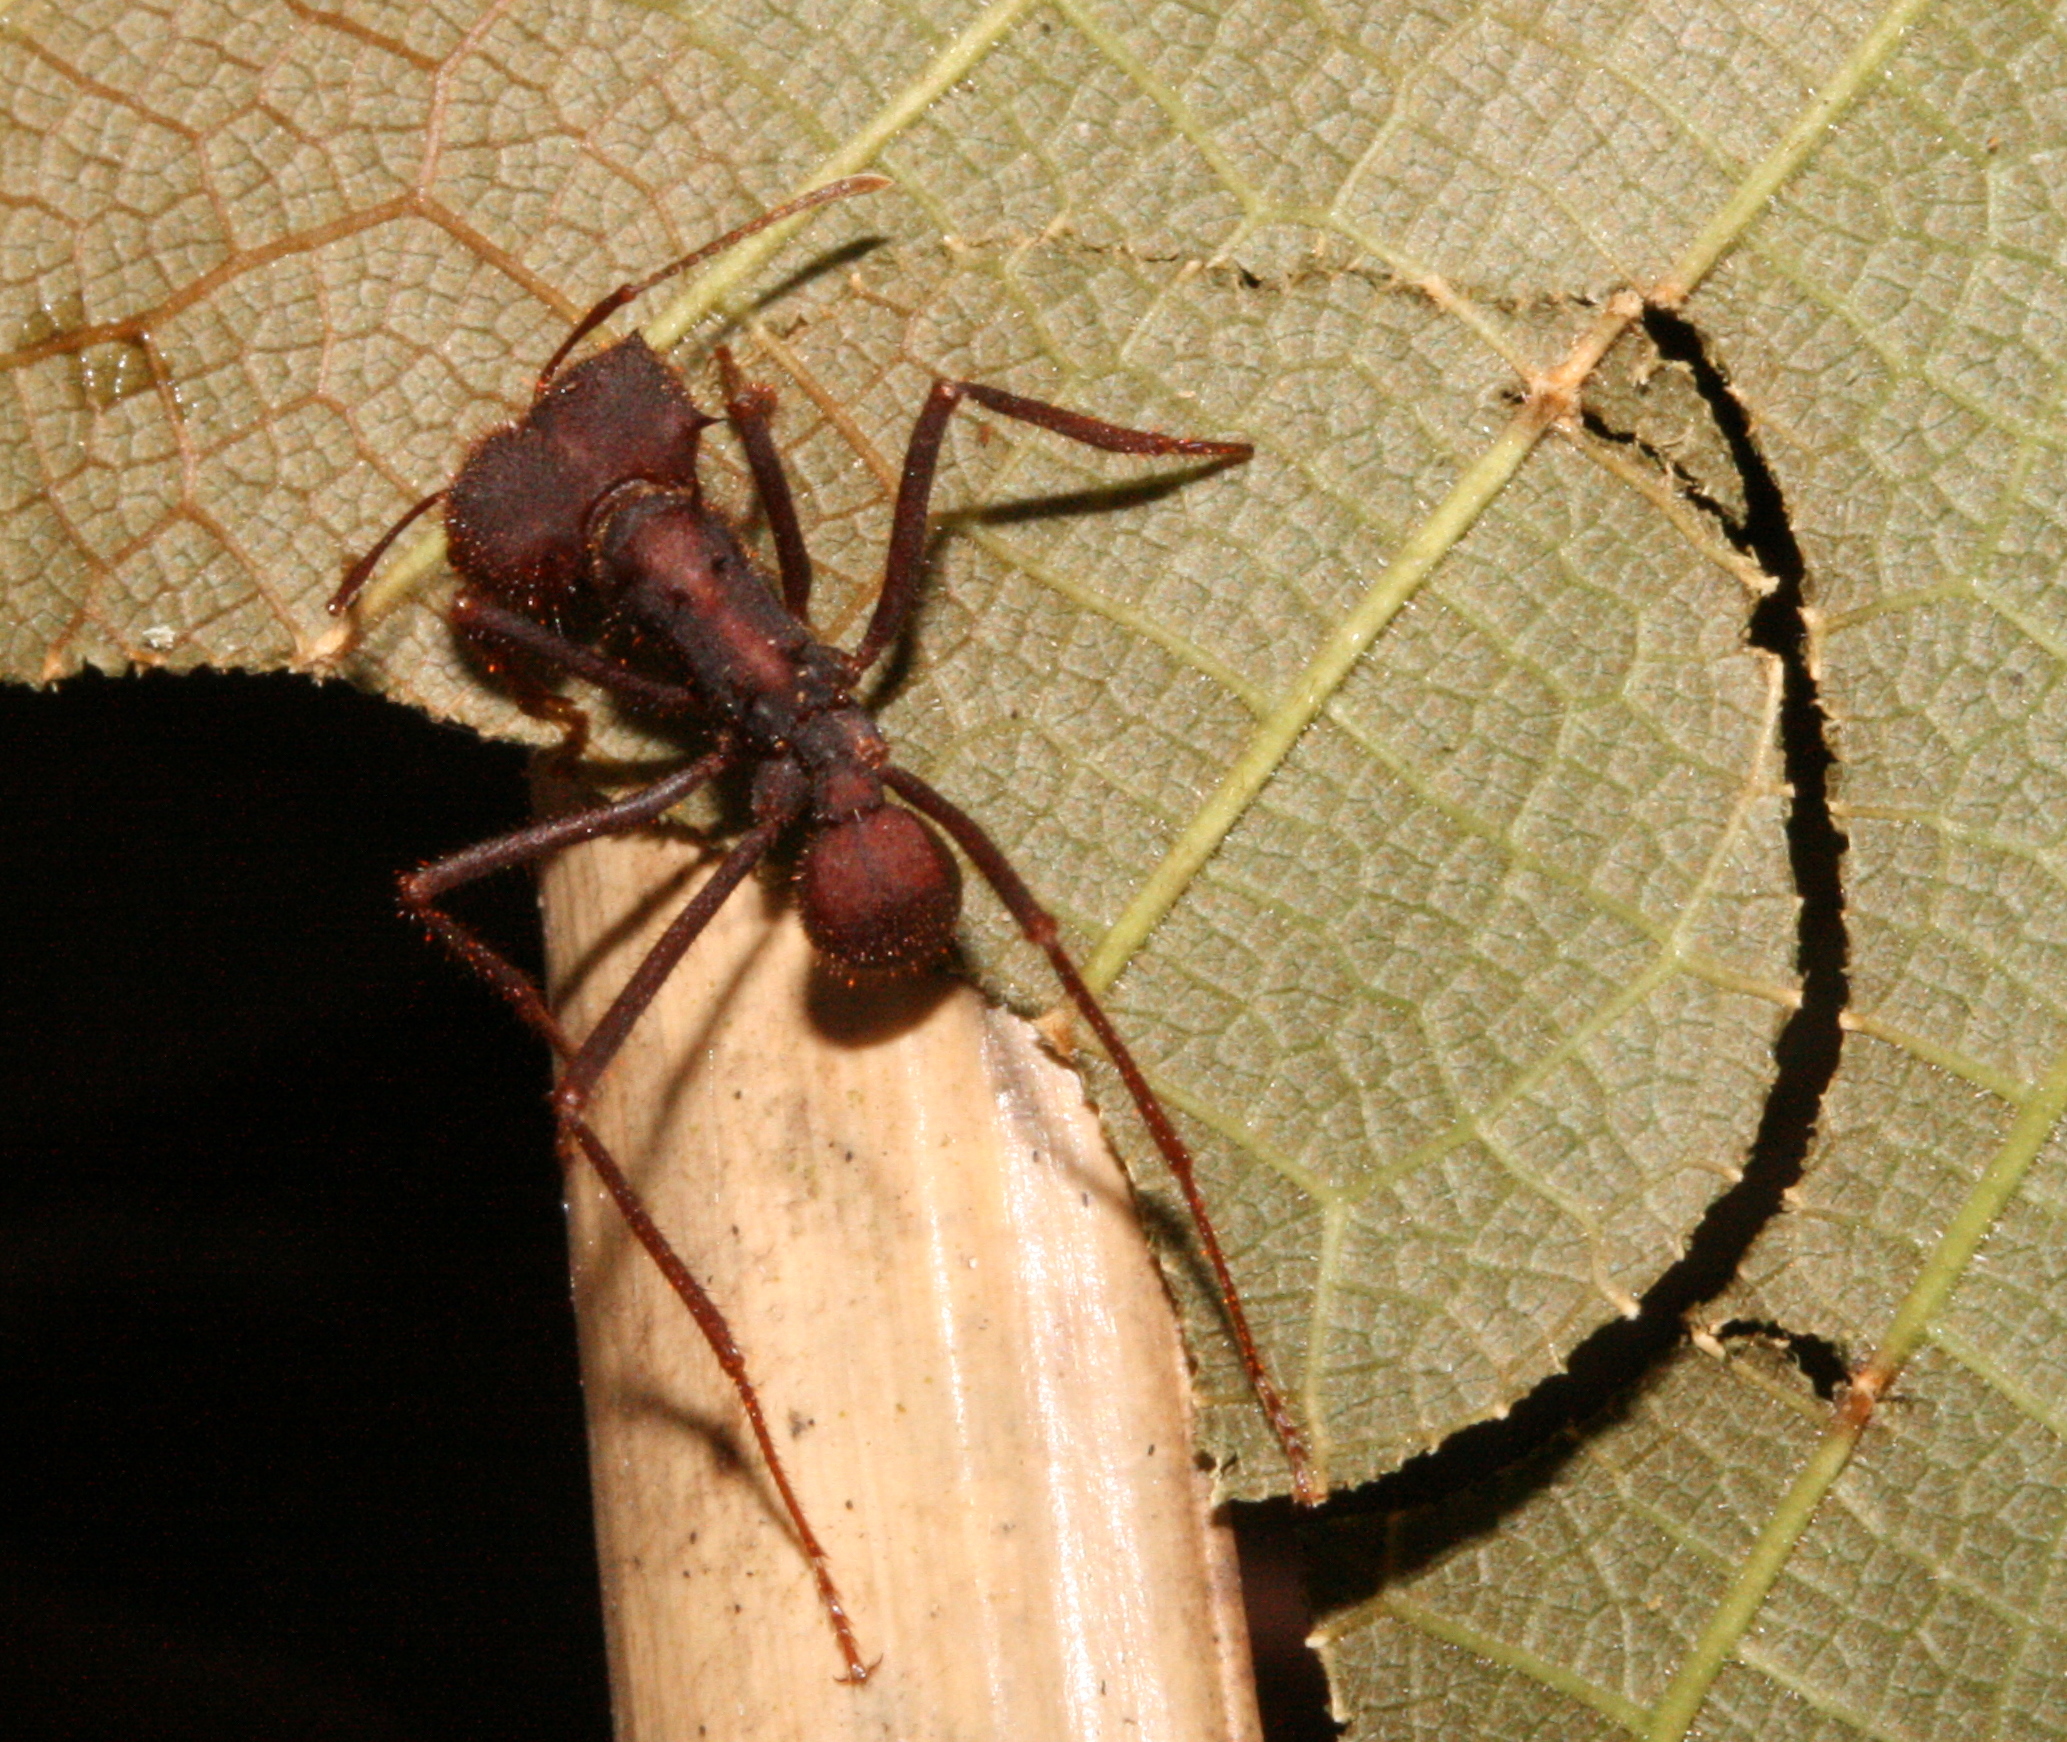 Leaf-cutter ant